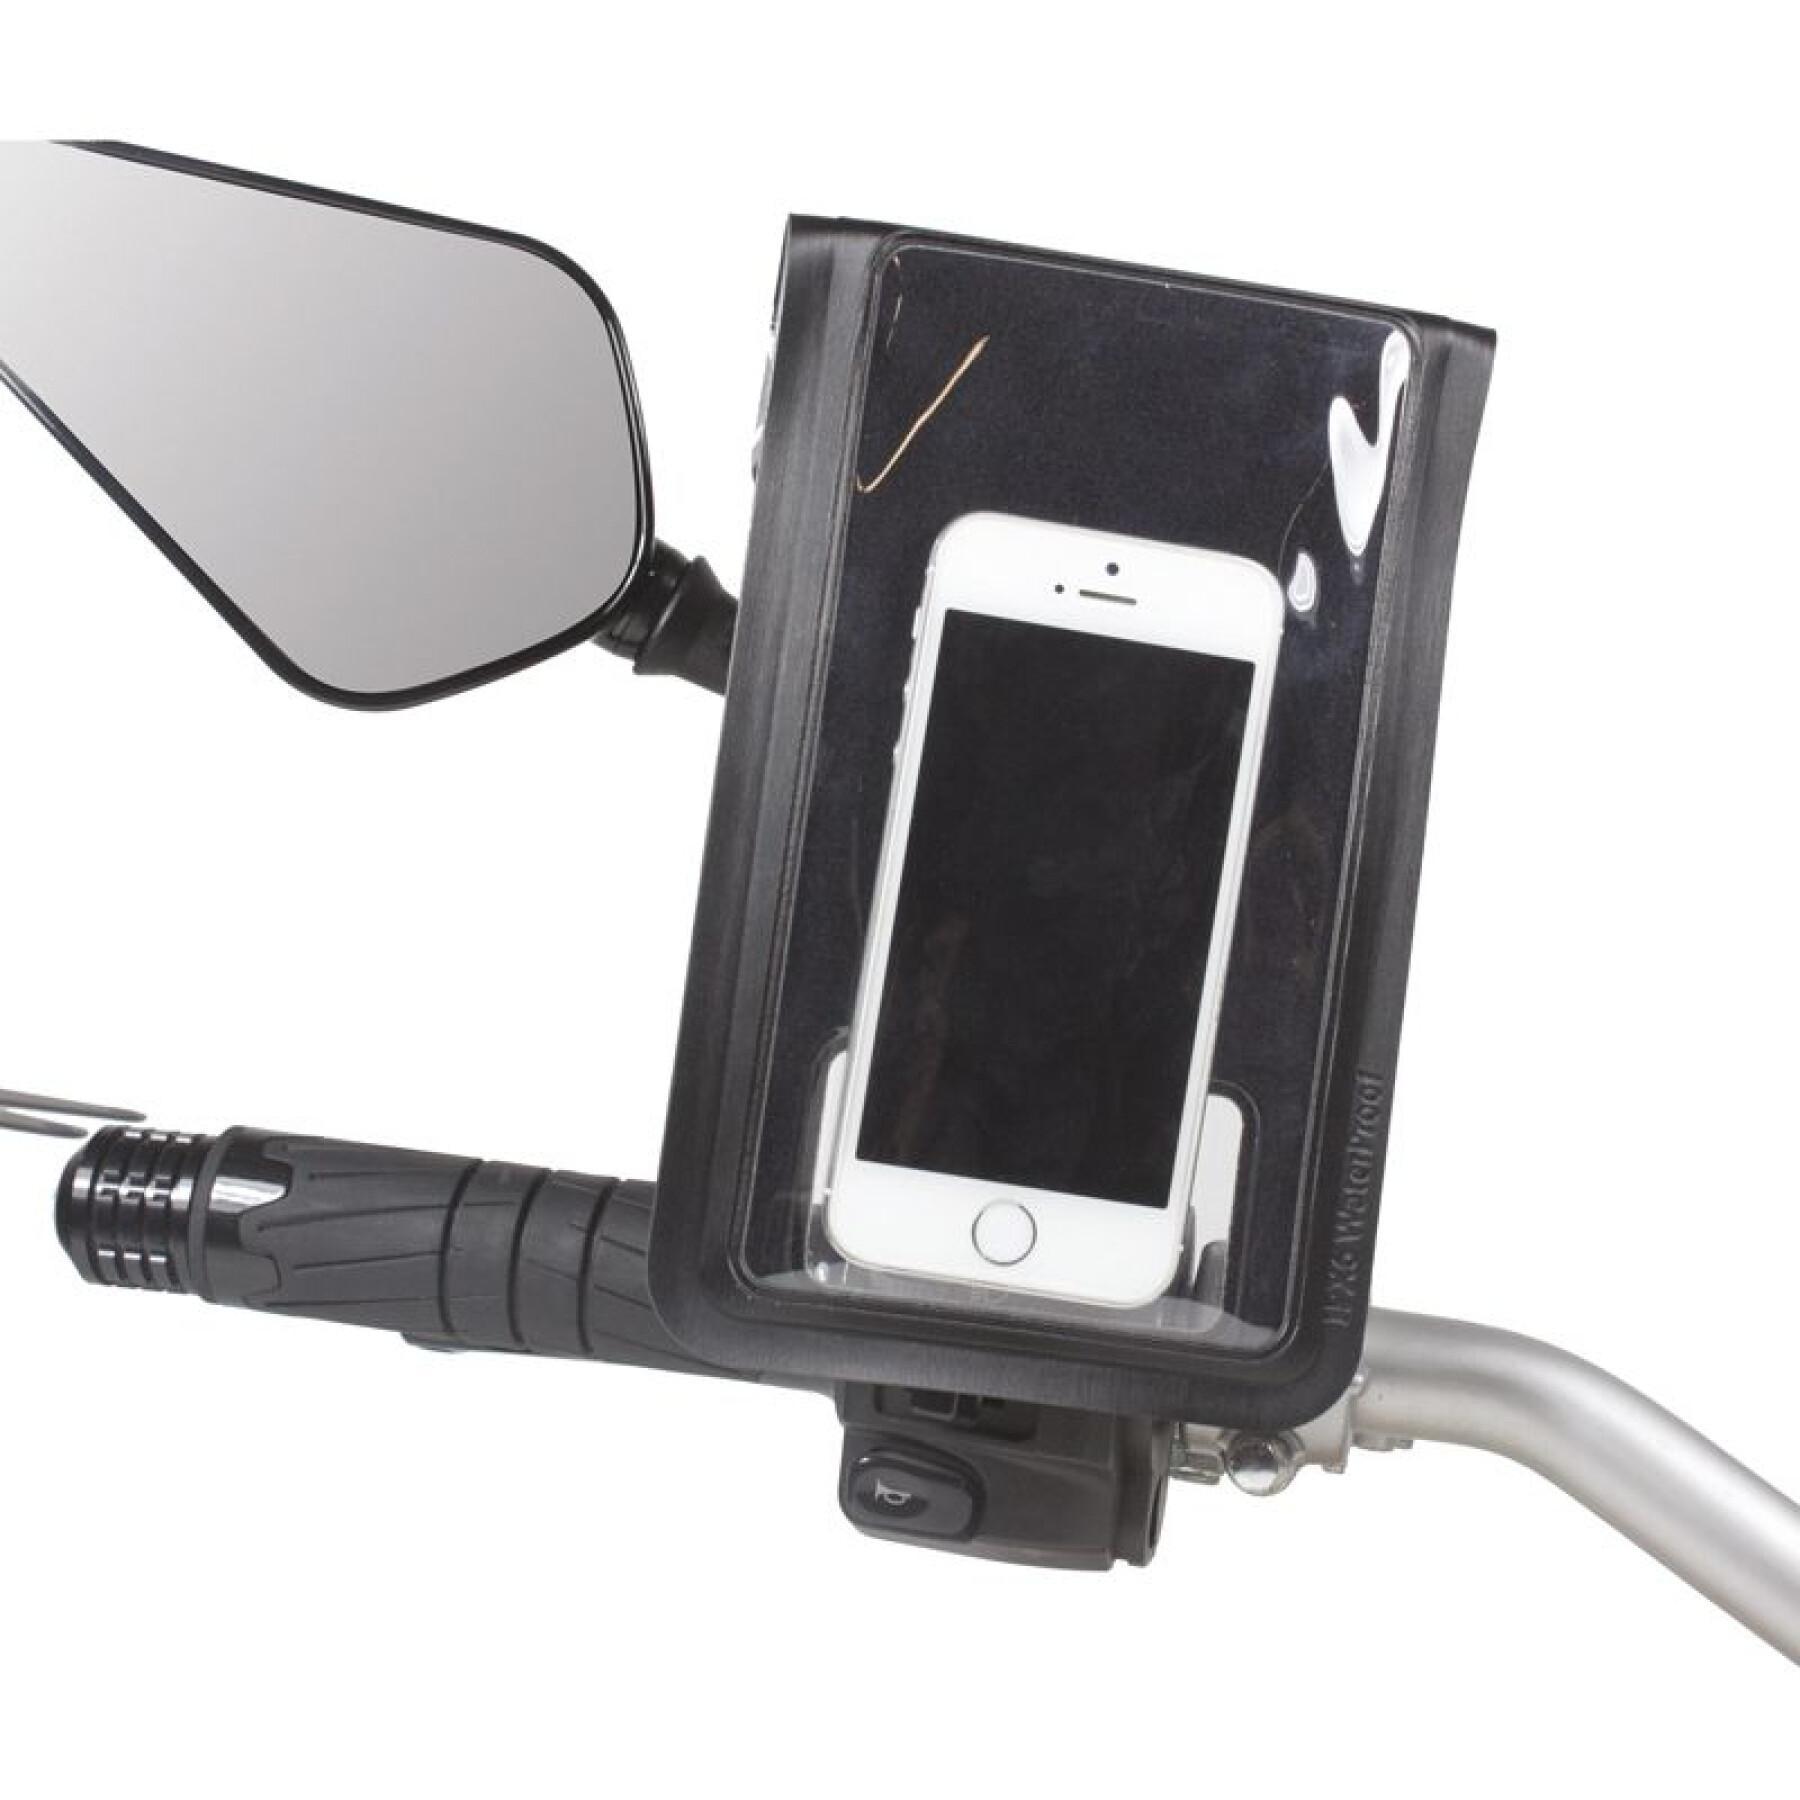 Smartphonehouder op spiegel met oplader Chaft